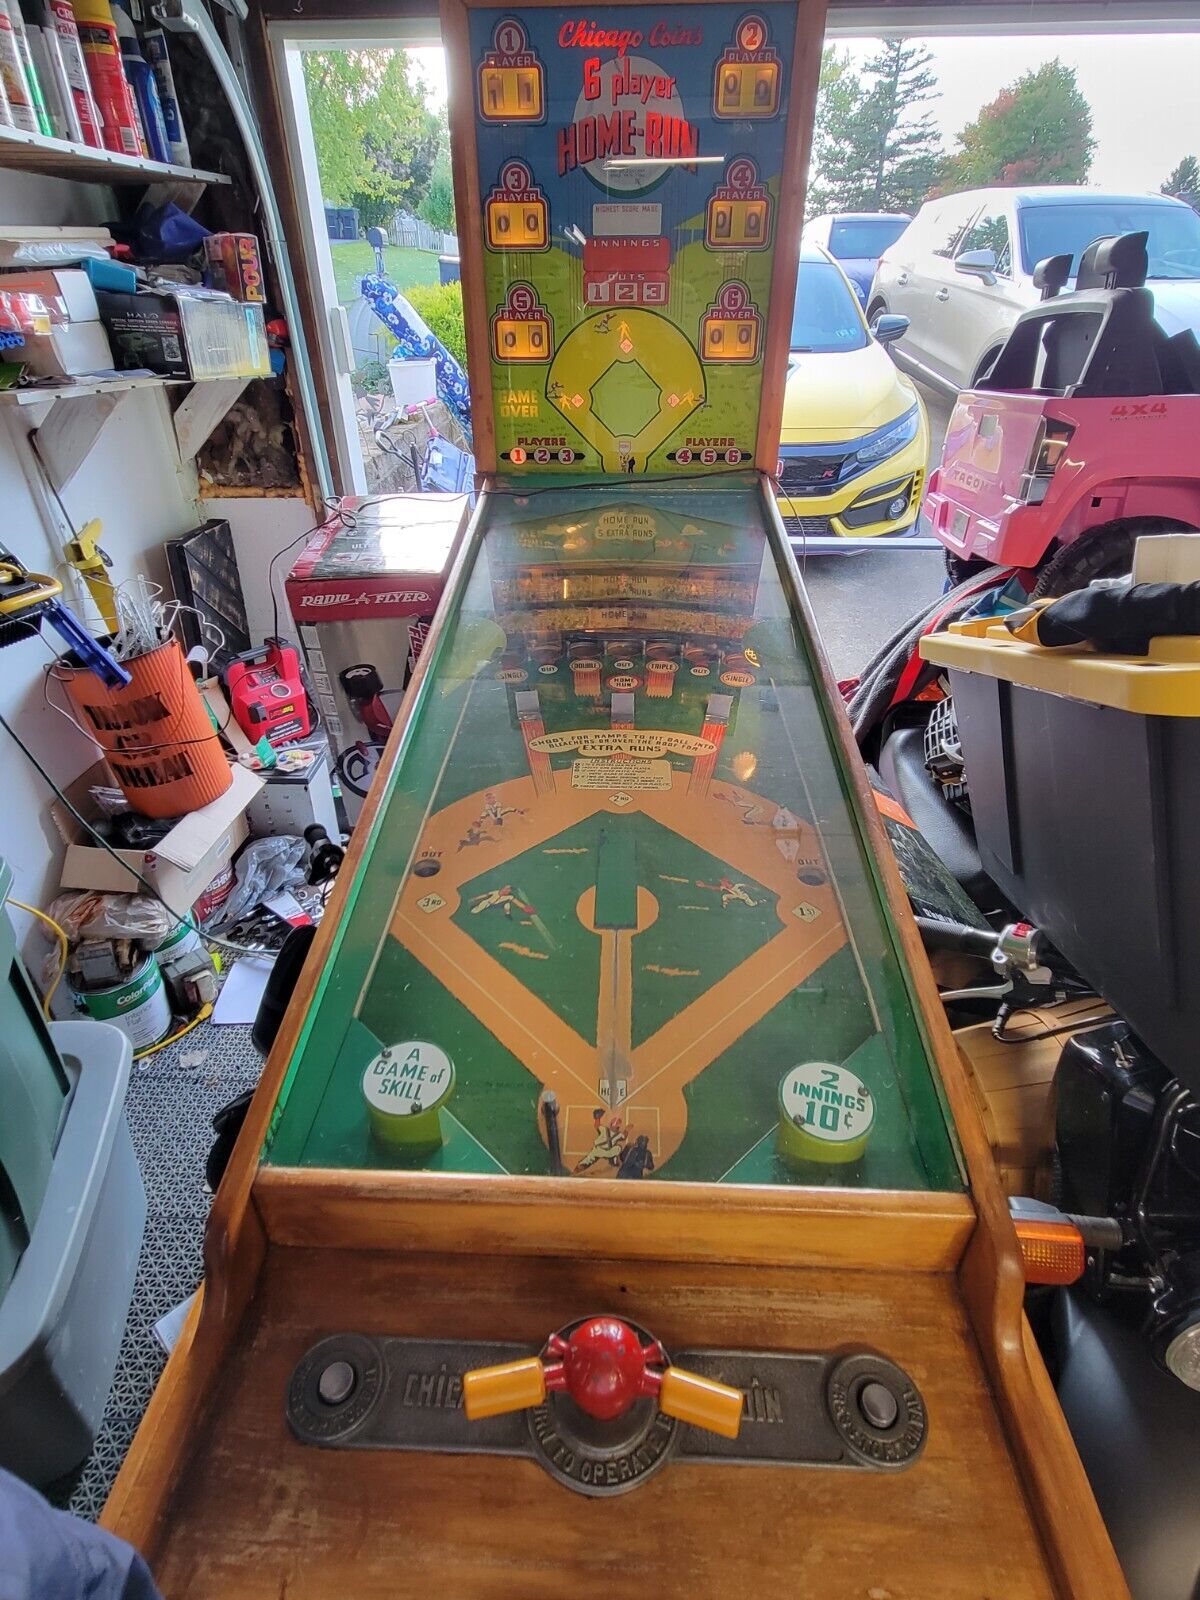 Chicago Coin 6 Player Home Run Pitch + Bat Vintage Baseball Arcade Machine 1954